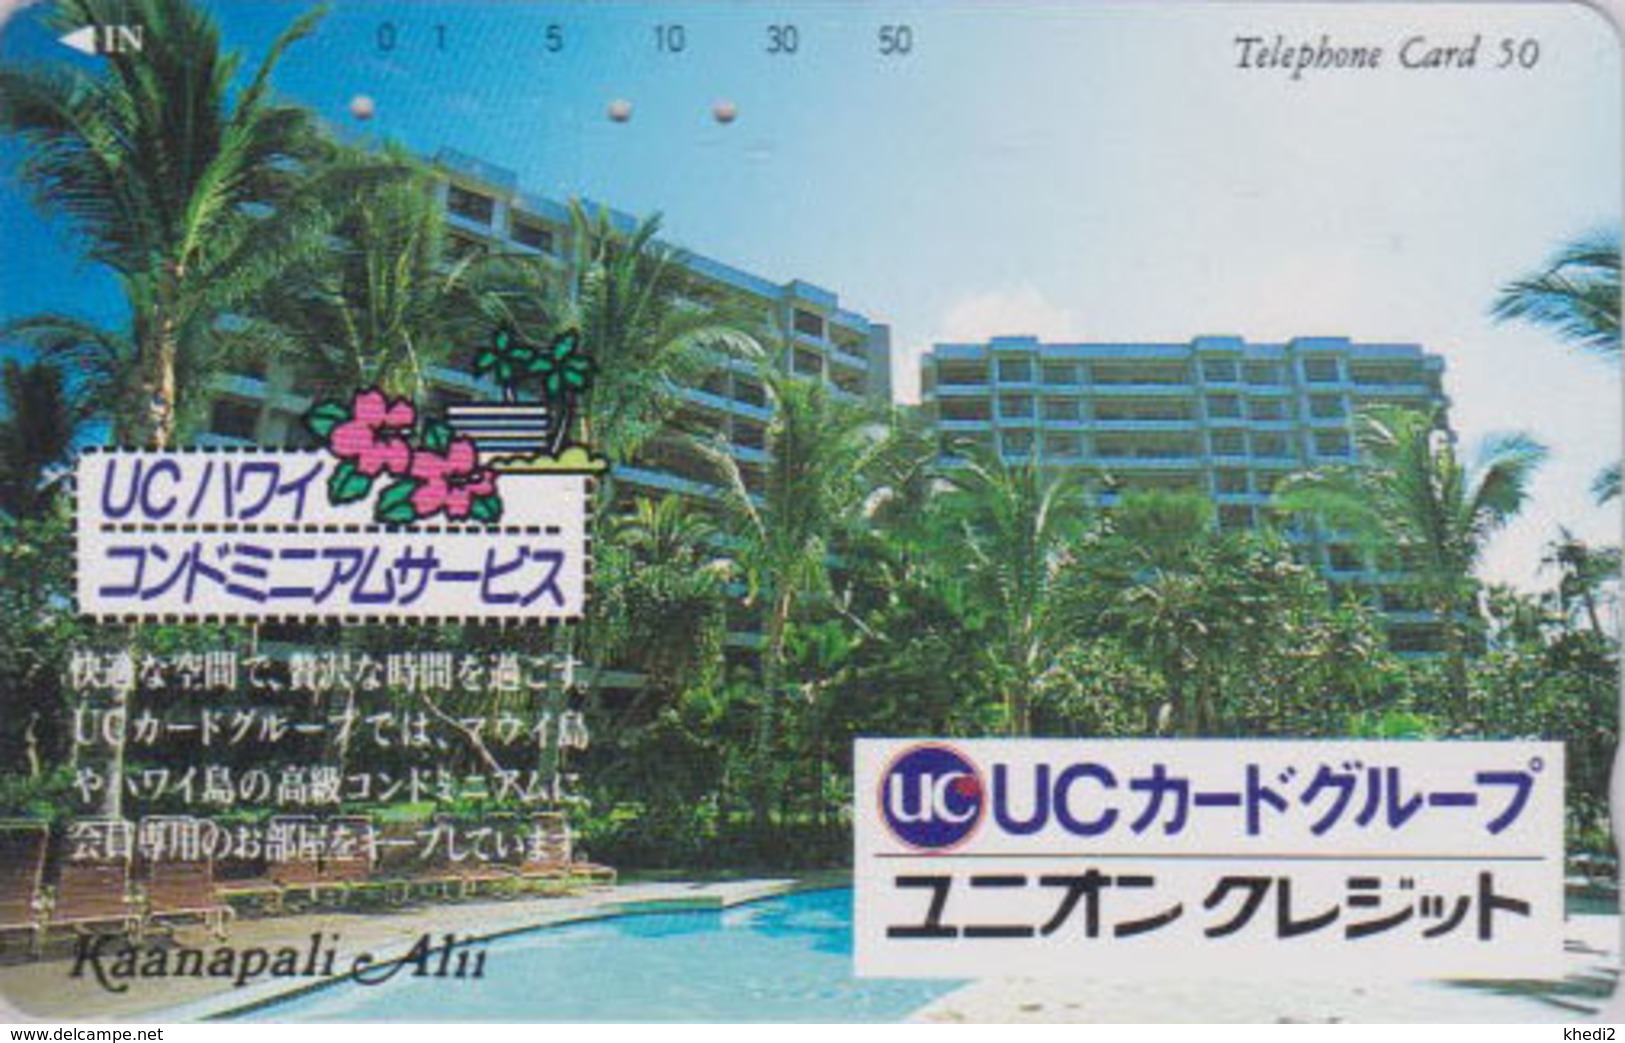 Télécarte Japon / 110-117617 - HAWAII - KAANAPALI - UC BANK CREDIT CARD / Modèle 2 - Japan Phonecard - Site USA 460 - Sellos & Monedas